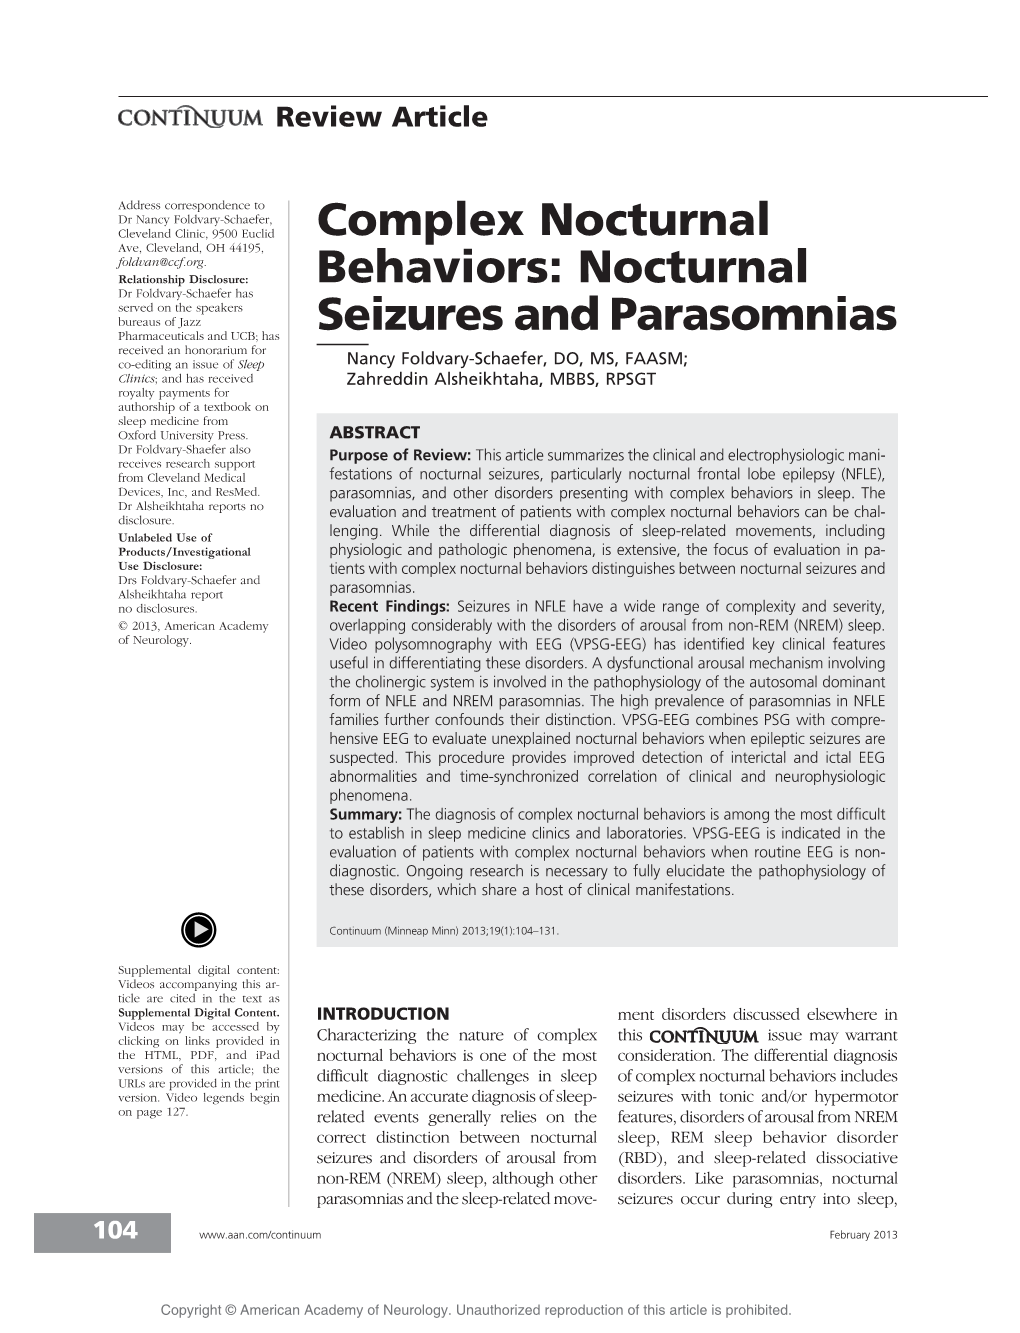 Nocturnal Seizures and Parasomnias